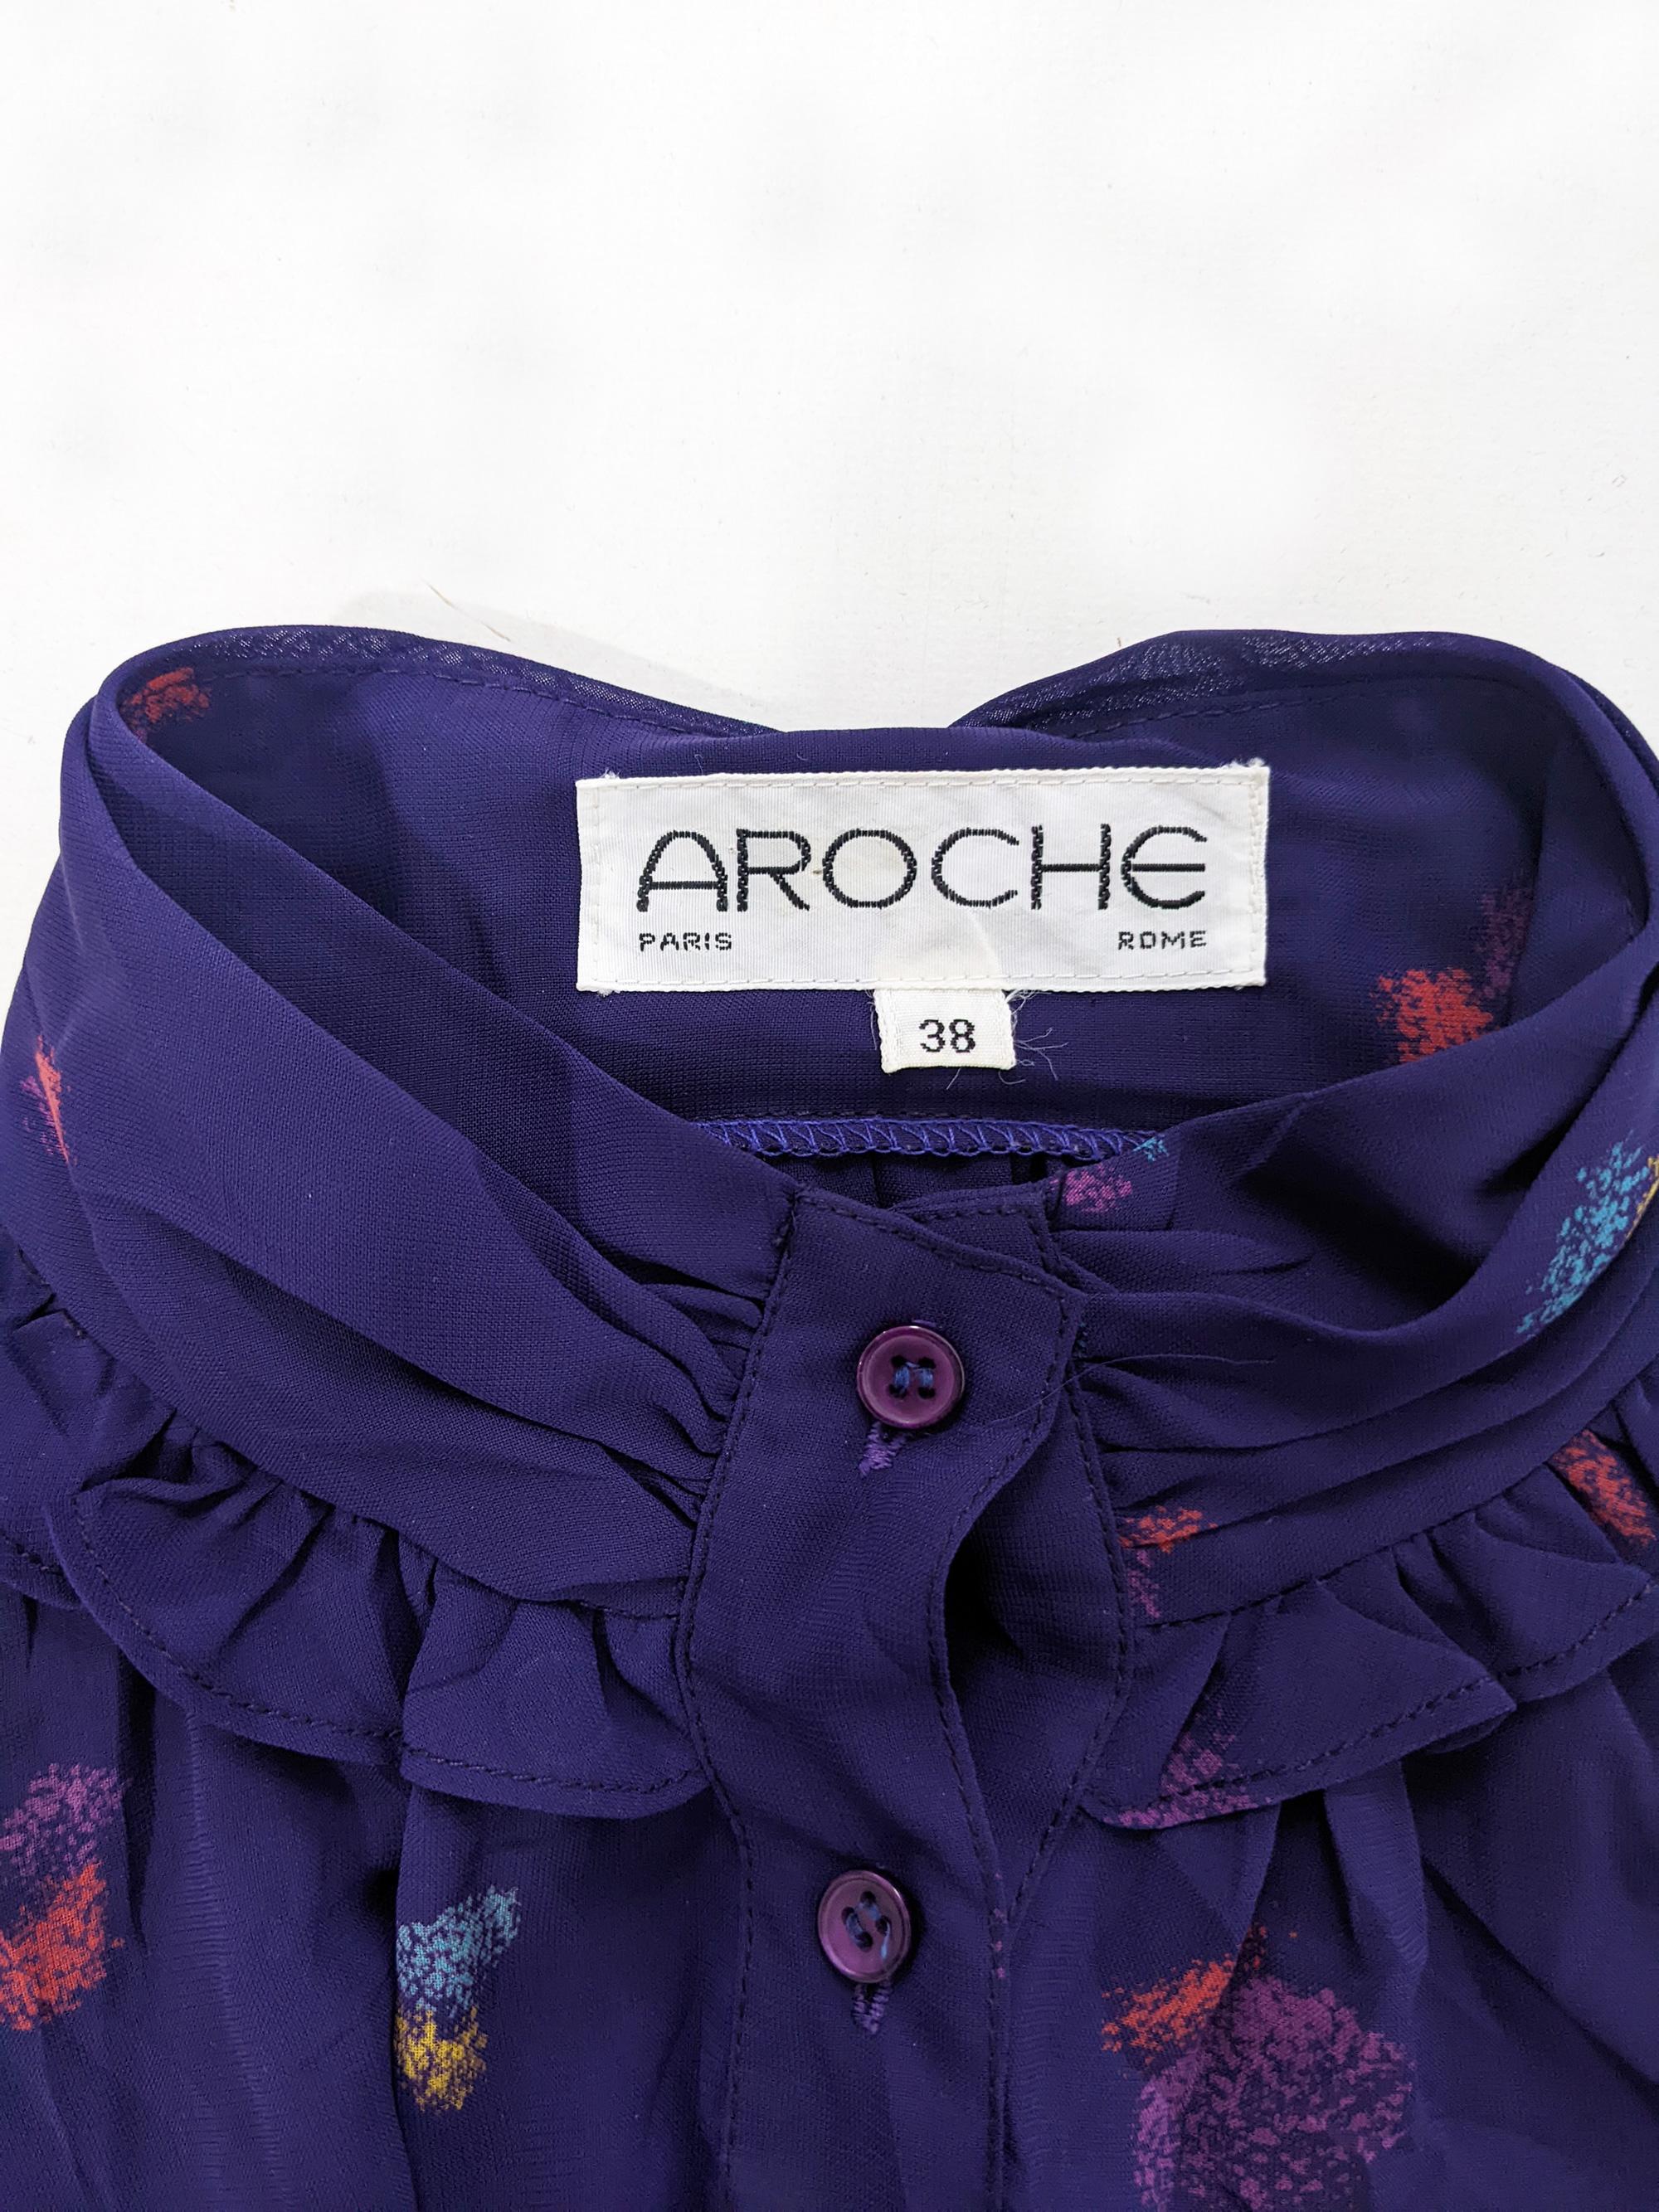 Aroche Paris Vintage 1970s Sheer Purple Ruffle Collar High Neck Shirt Dress For Sale 5